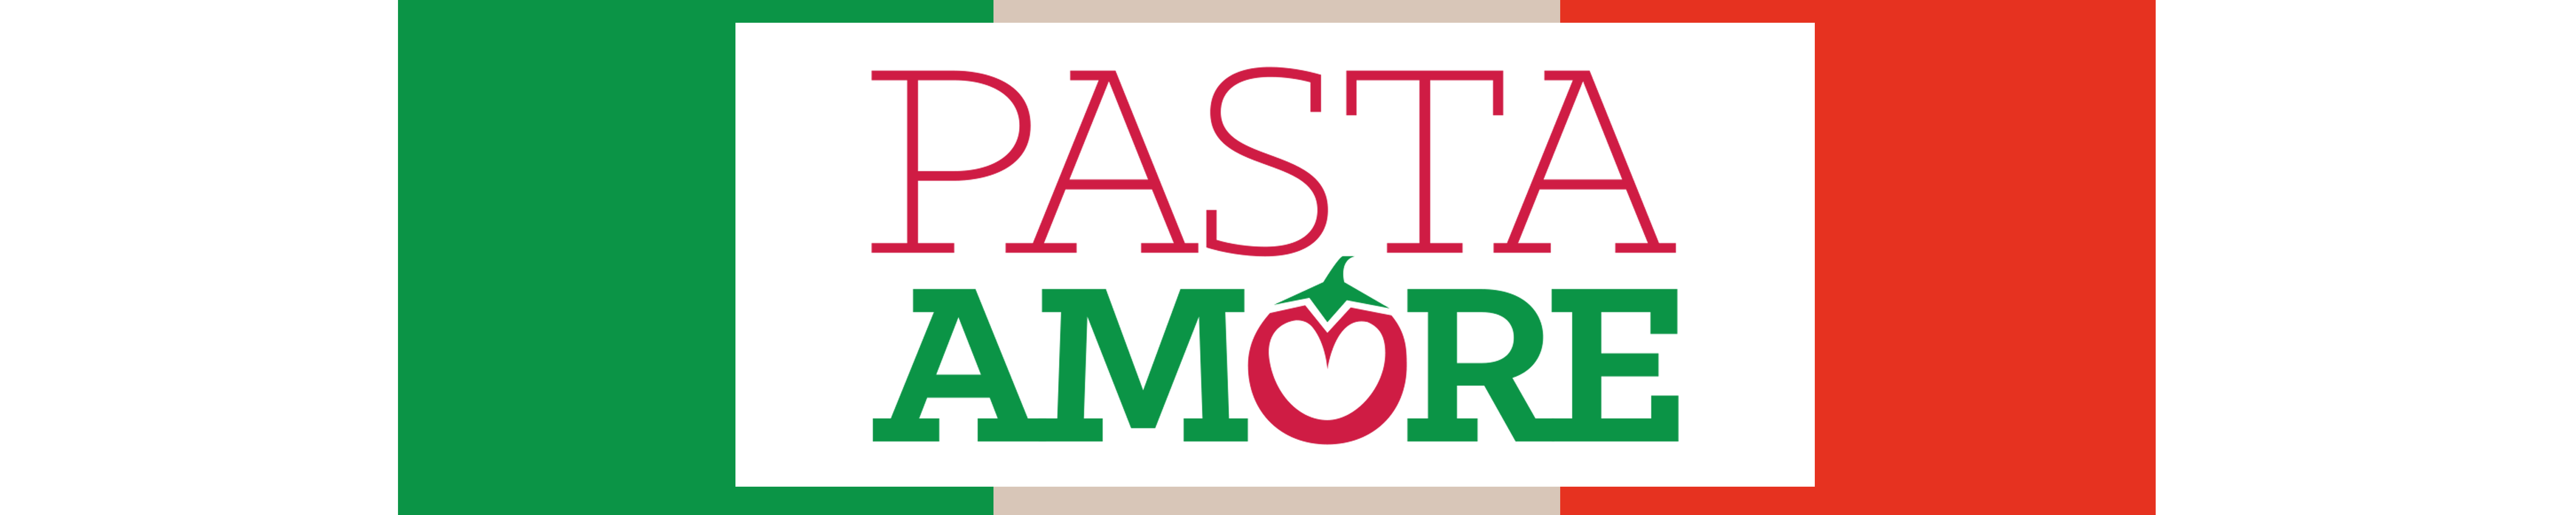 pasta amore logo